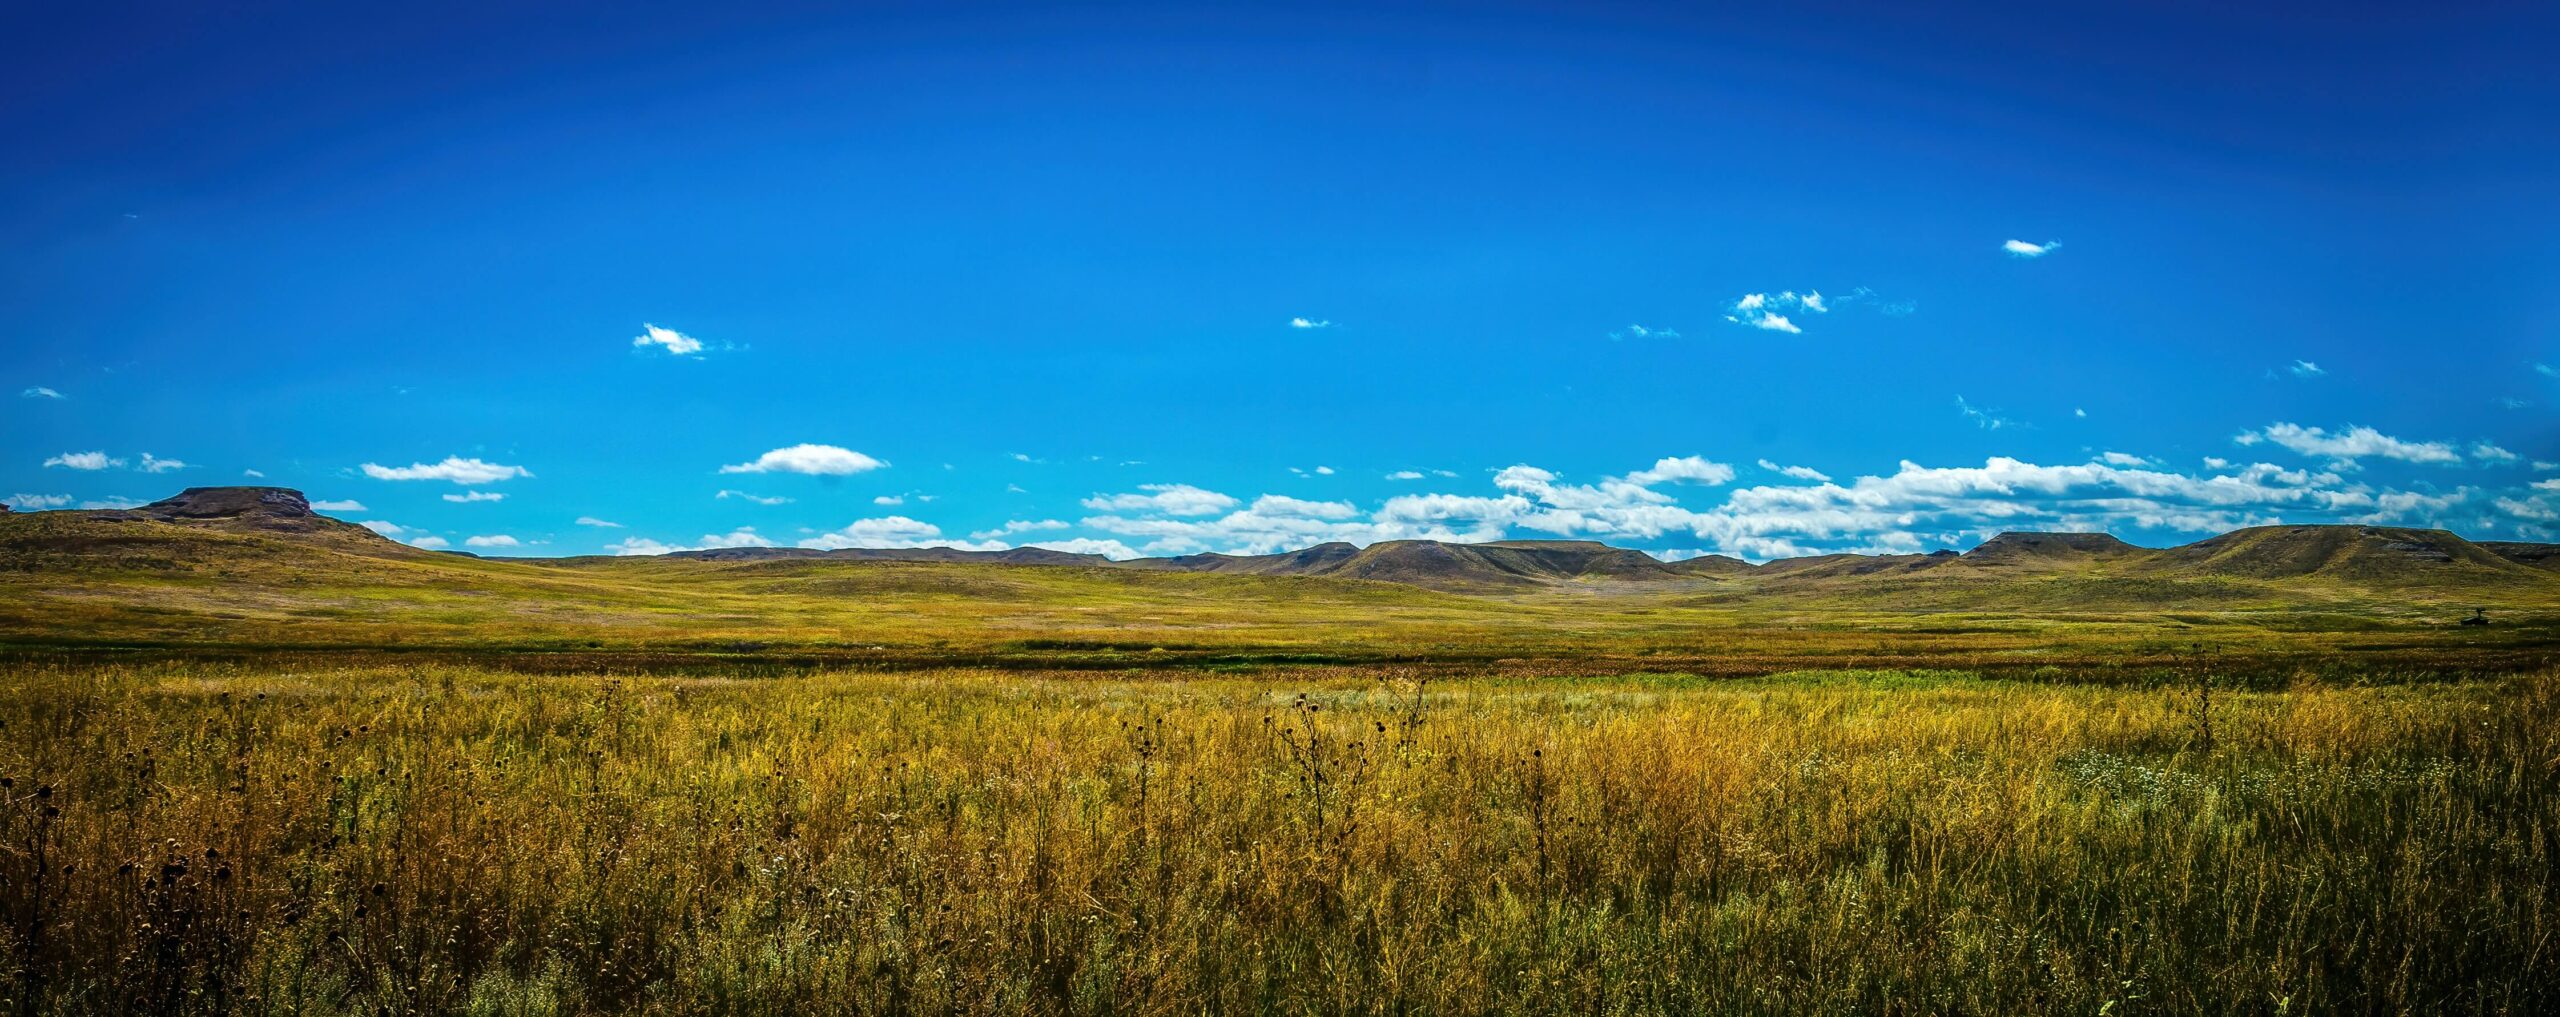 Green Prairie With Blue Sky